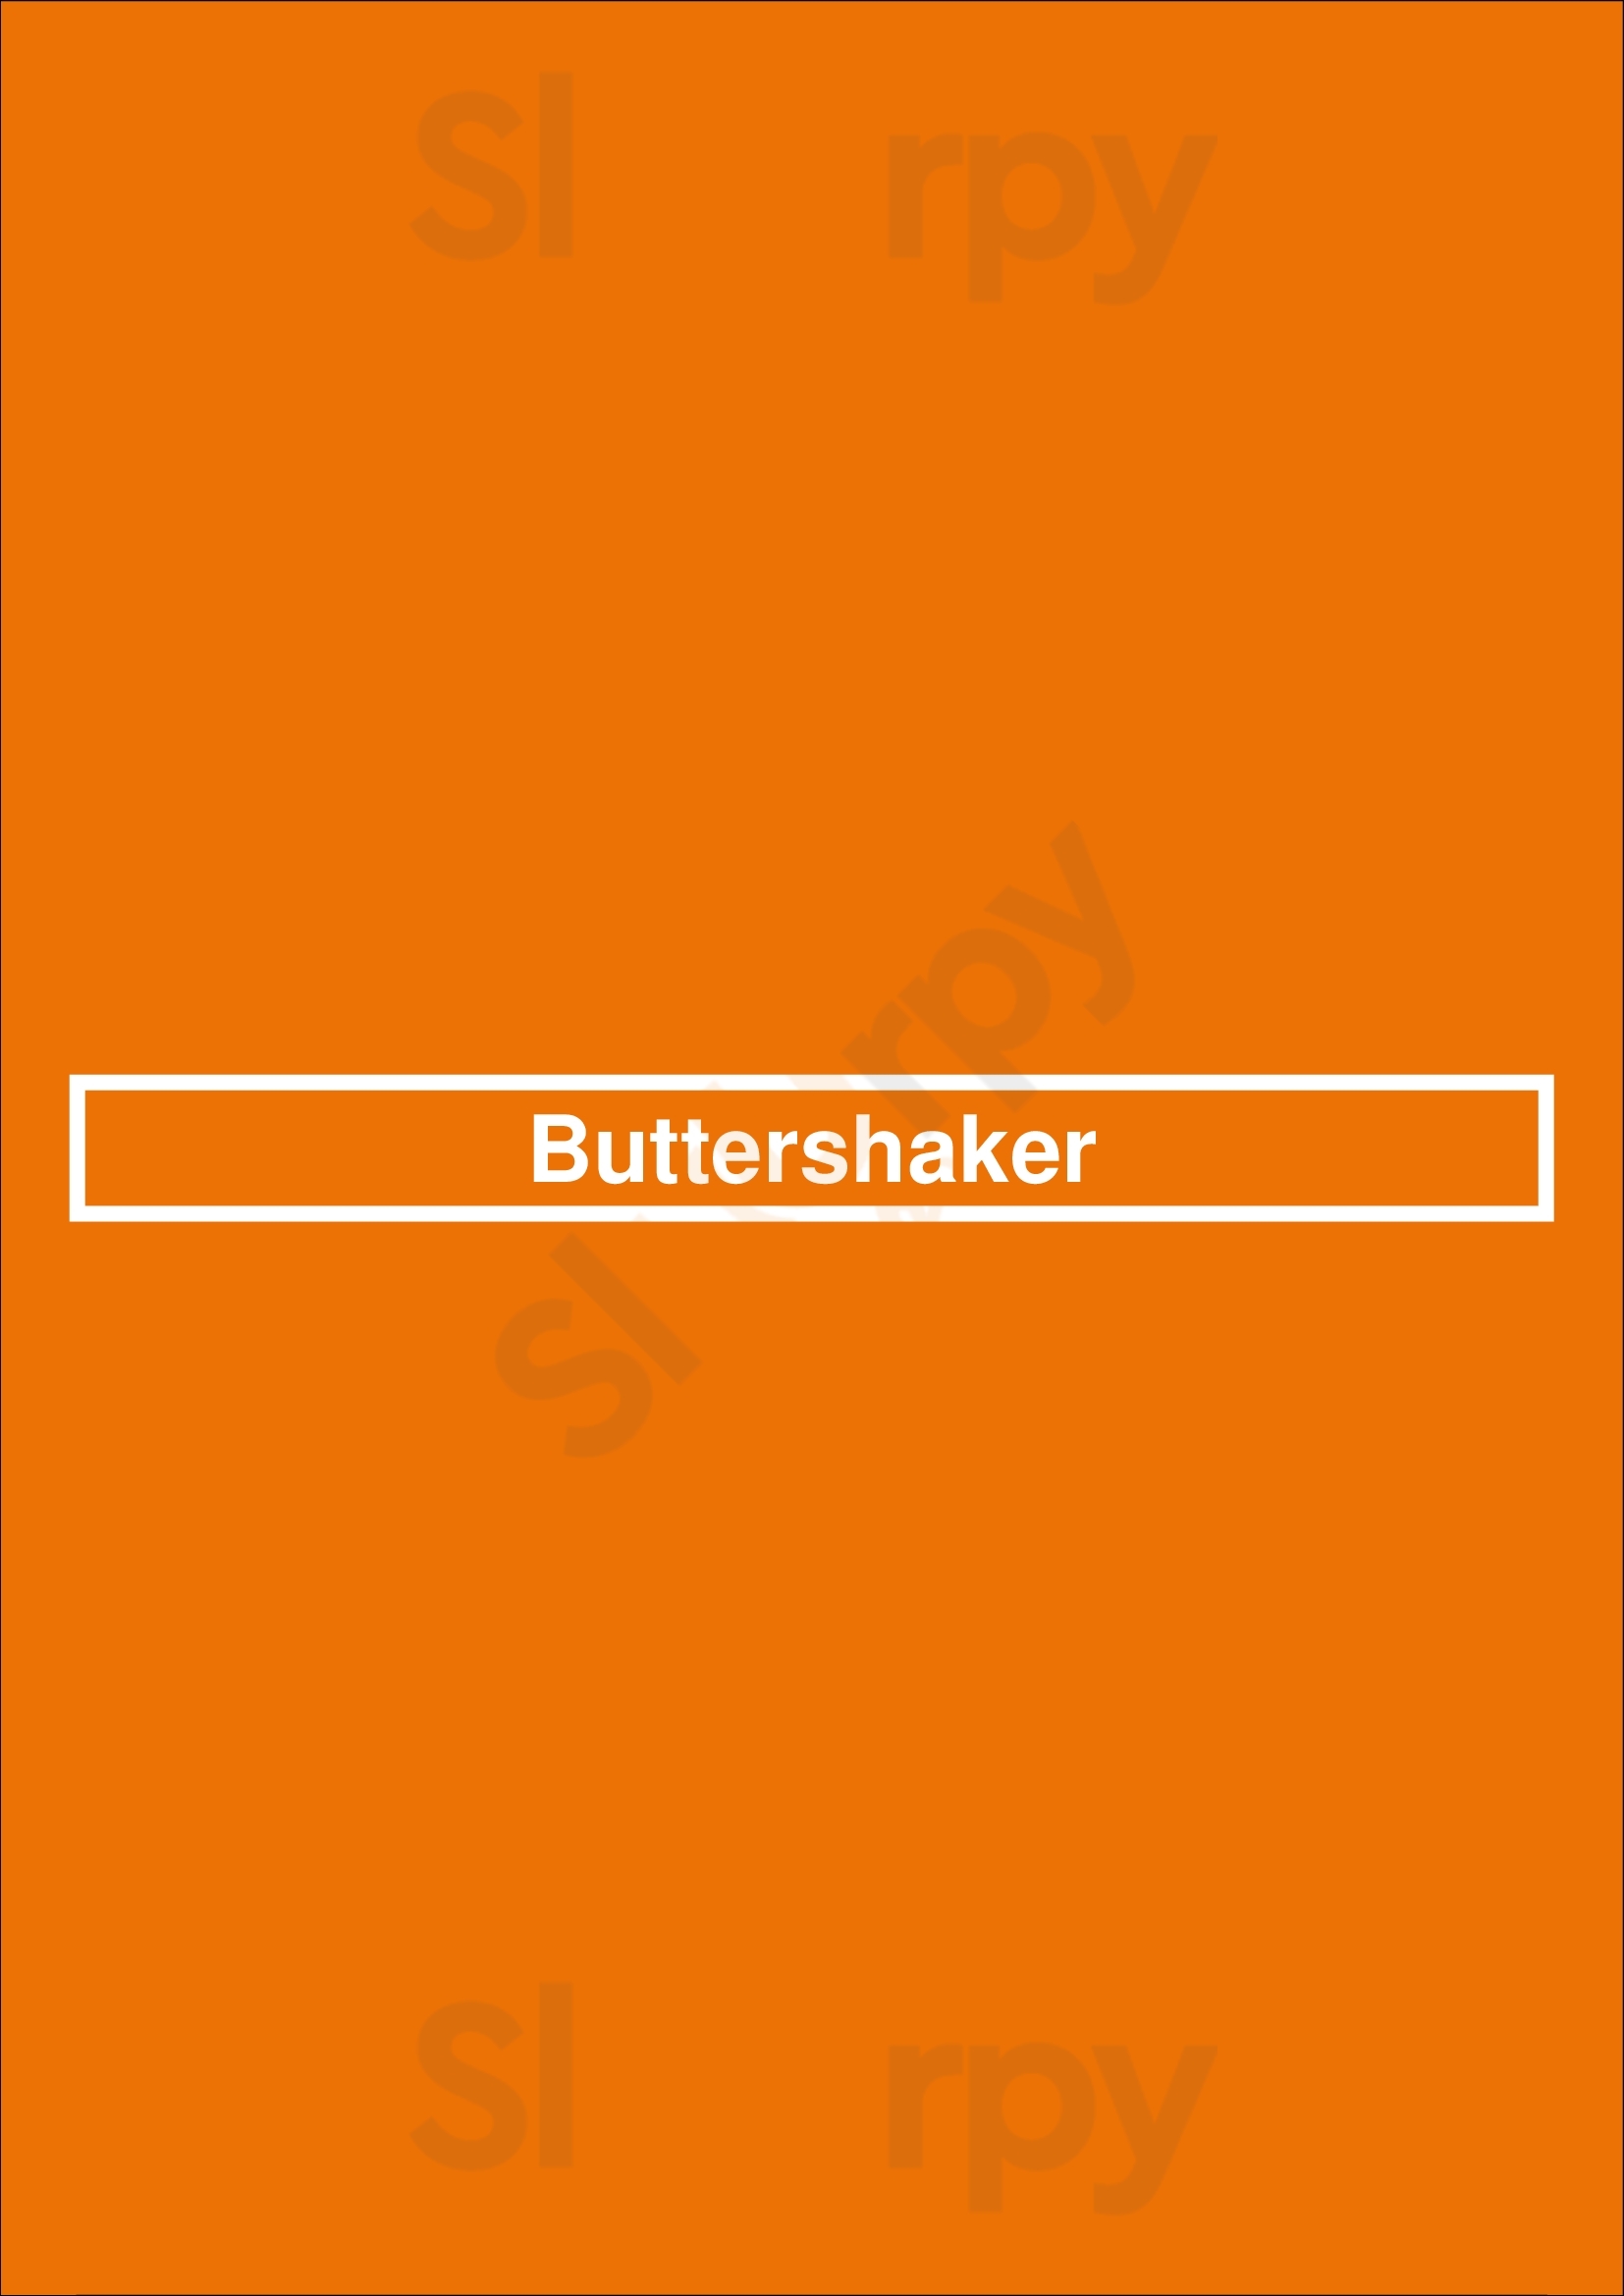 Buttershaker Düsseldorf Menu - 1